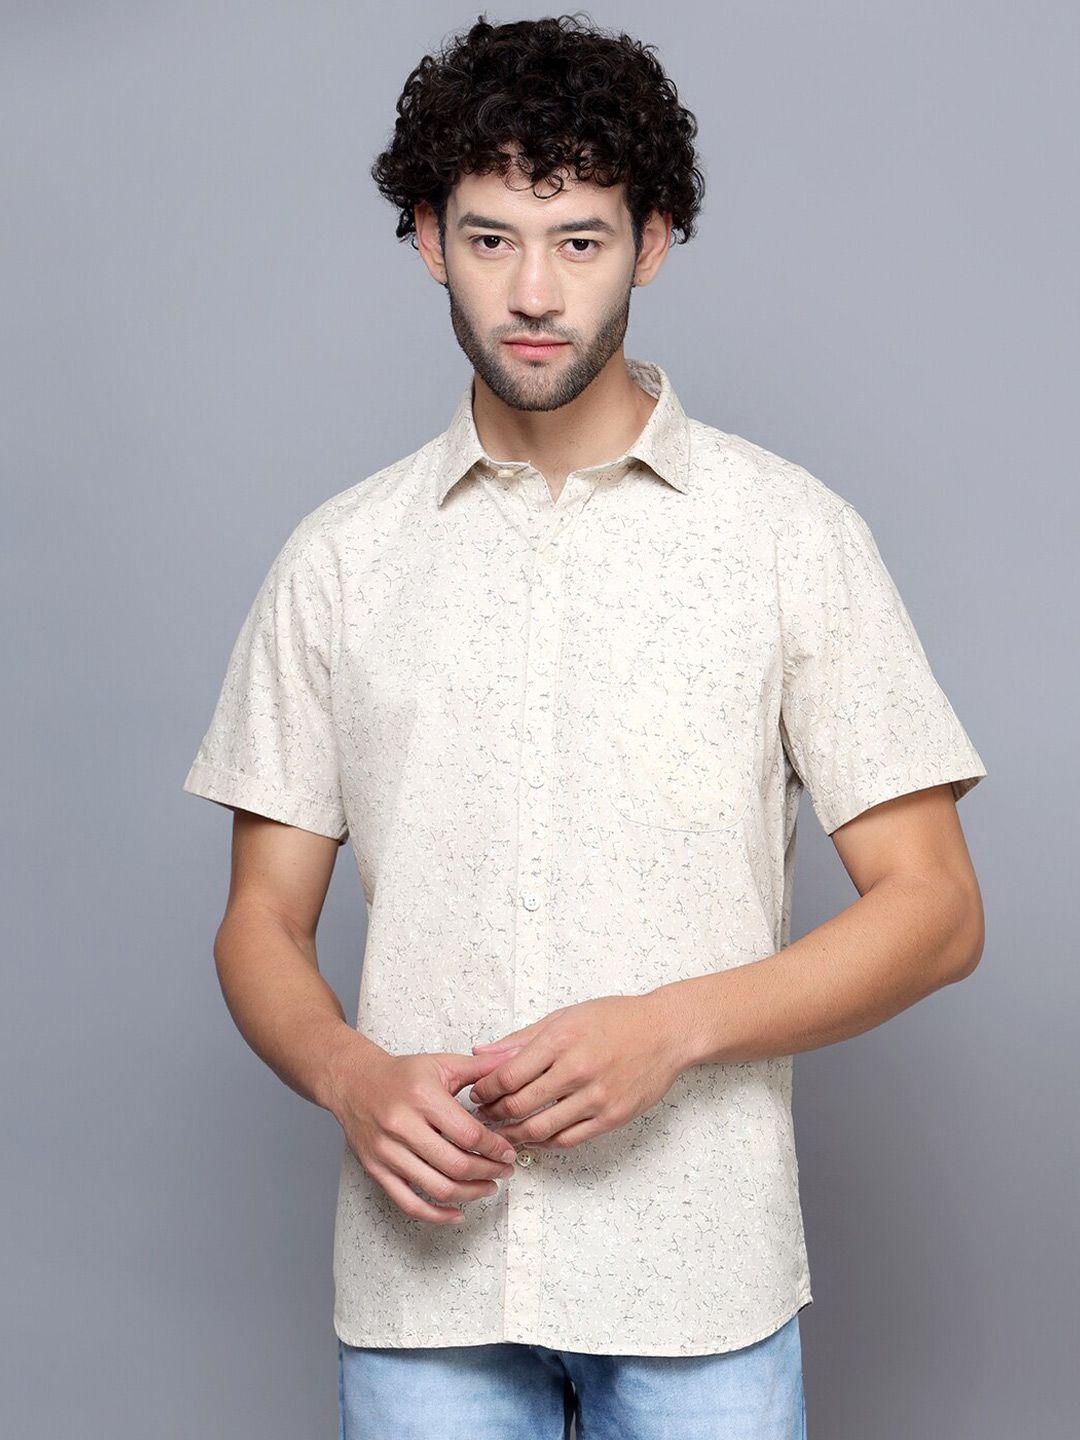 cantabil smart abstract printed cotton casual shirt